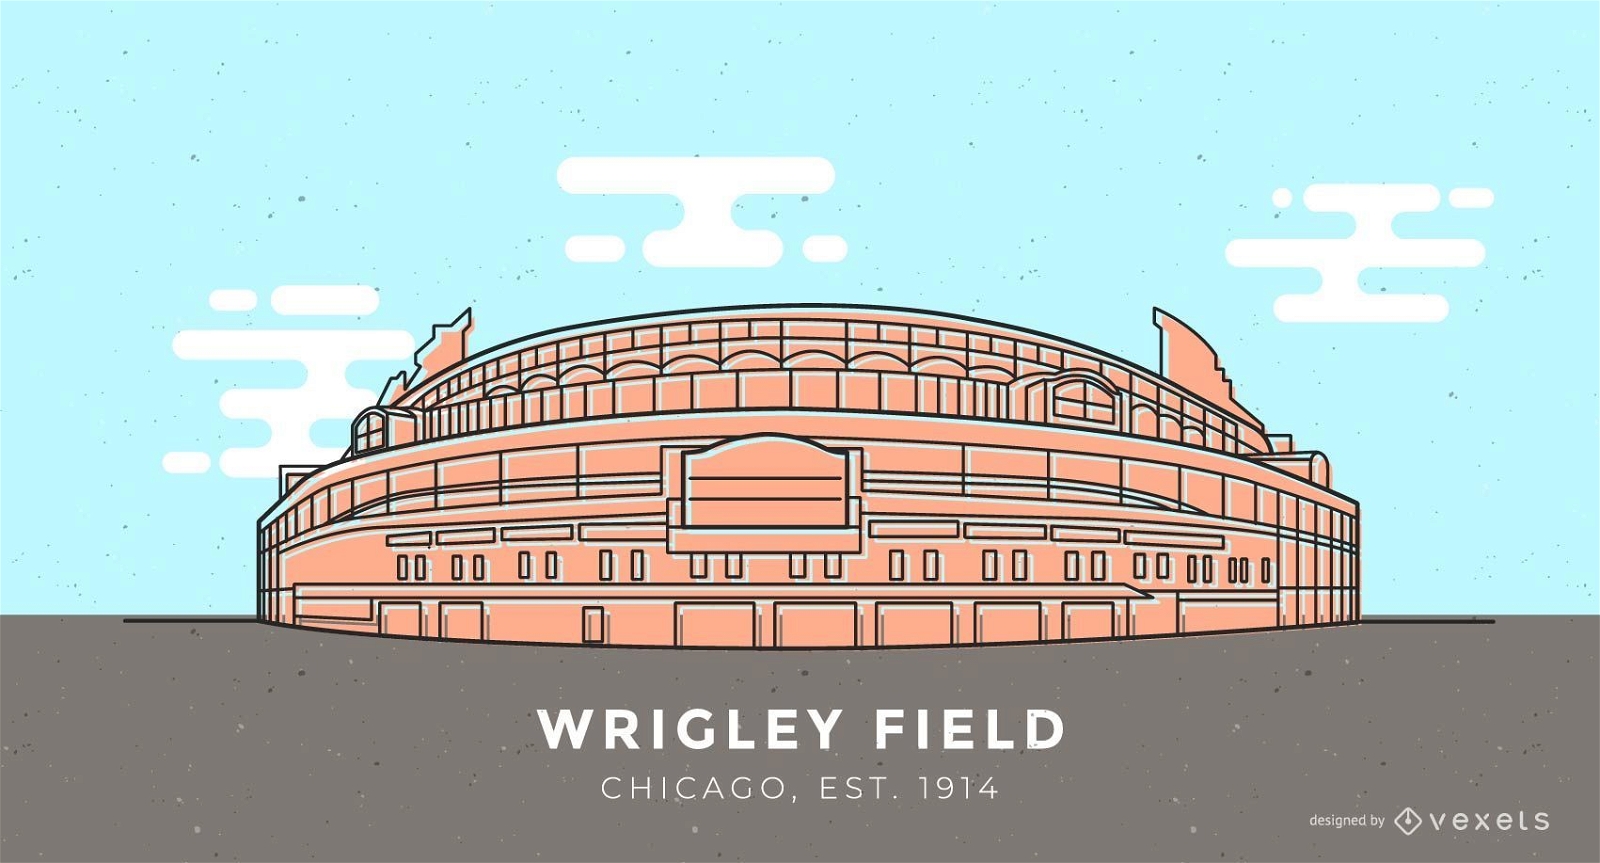 Wrigley Field baseball stadium illustration